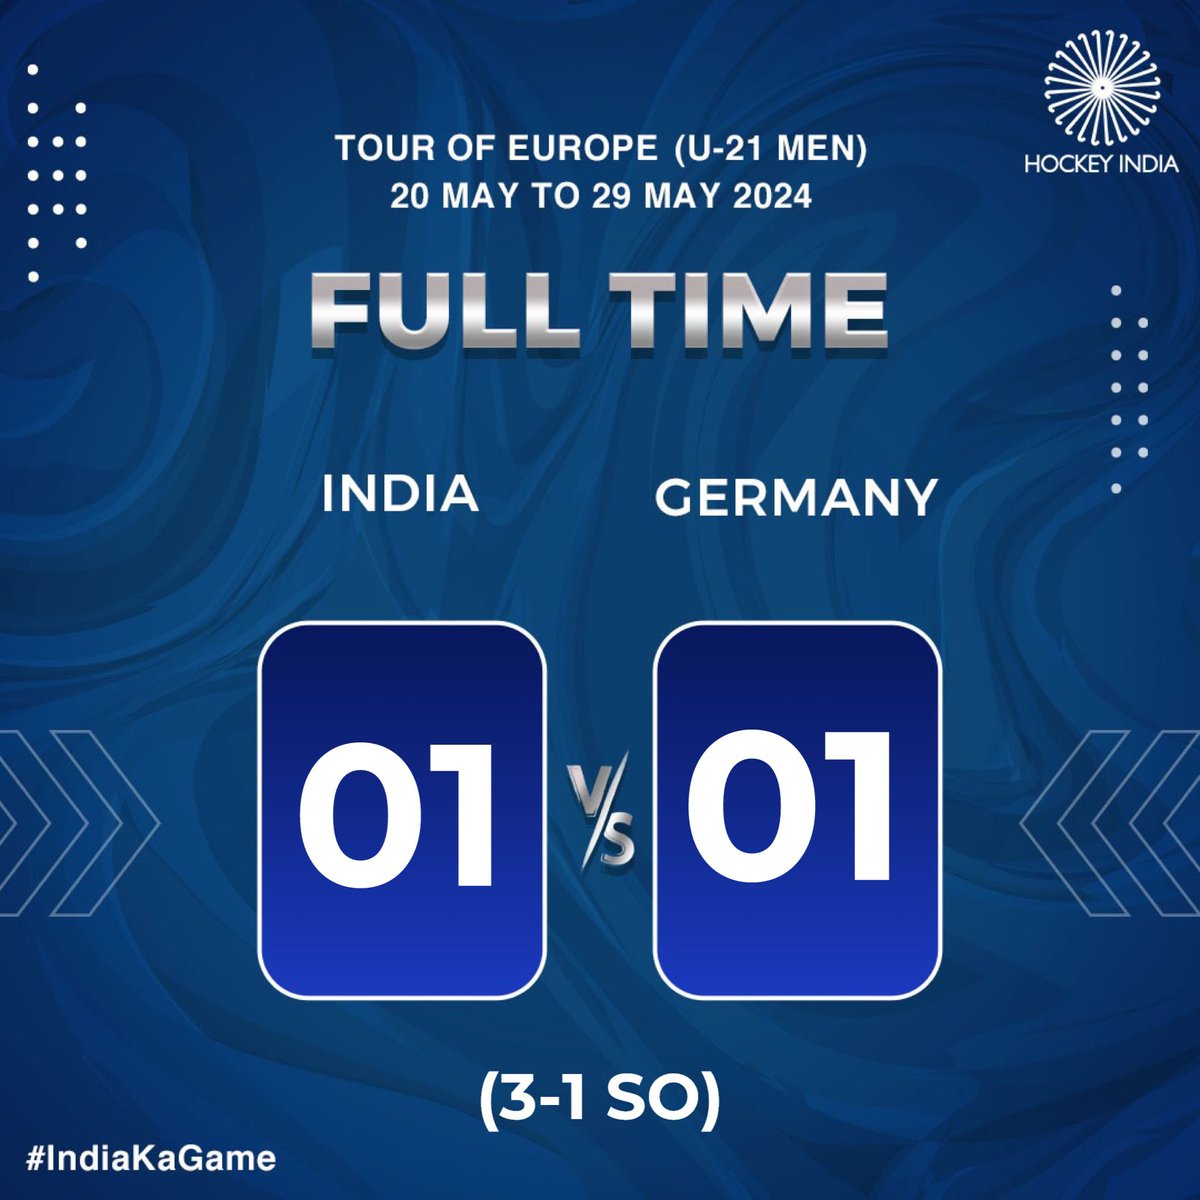 What a way to end the match, Taking the W home 💪🏻

#HockeyIndia #IndiaKaGame
.
.
.
.
@CMO_Odisha @IndiaSports @Media_SAI @sports_odisha @Limca_Official @CocaCola_Ind